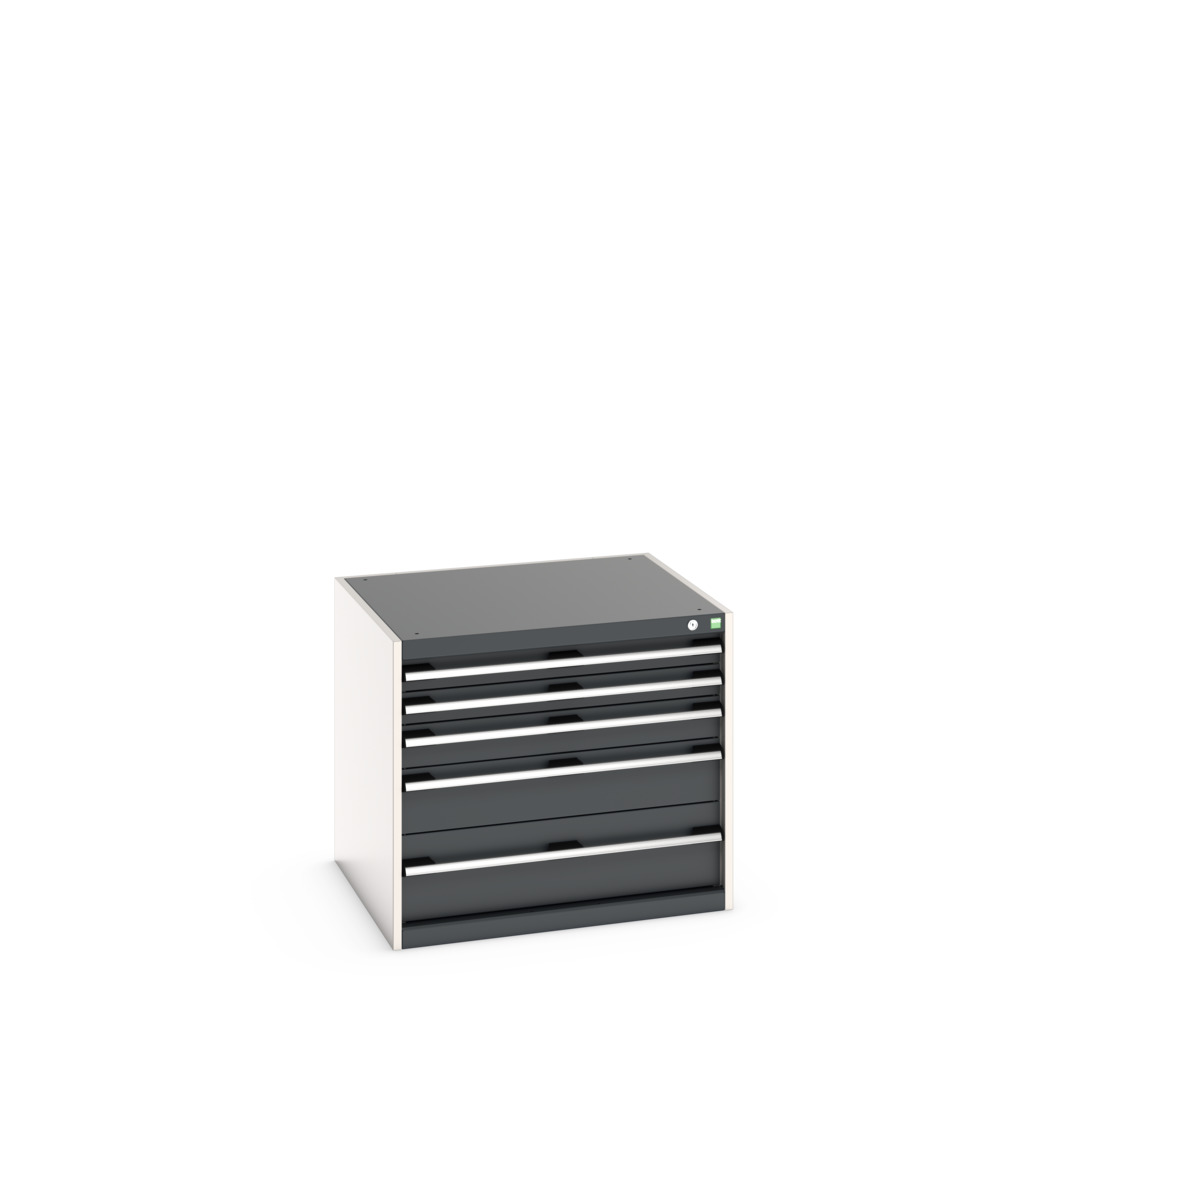 40028005. - cubio drawer cabinet 